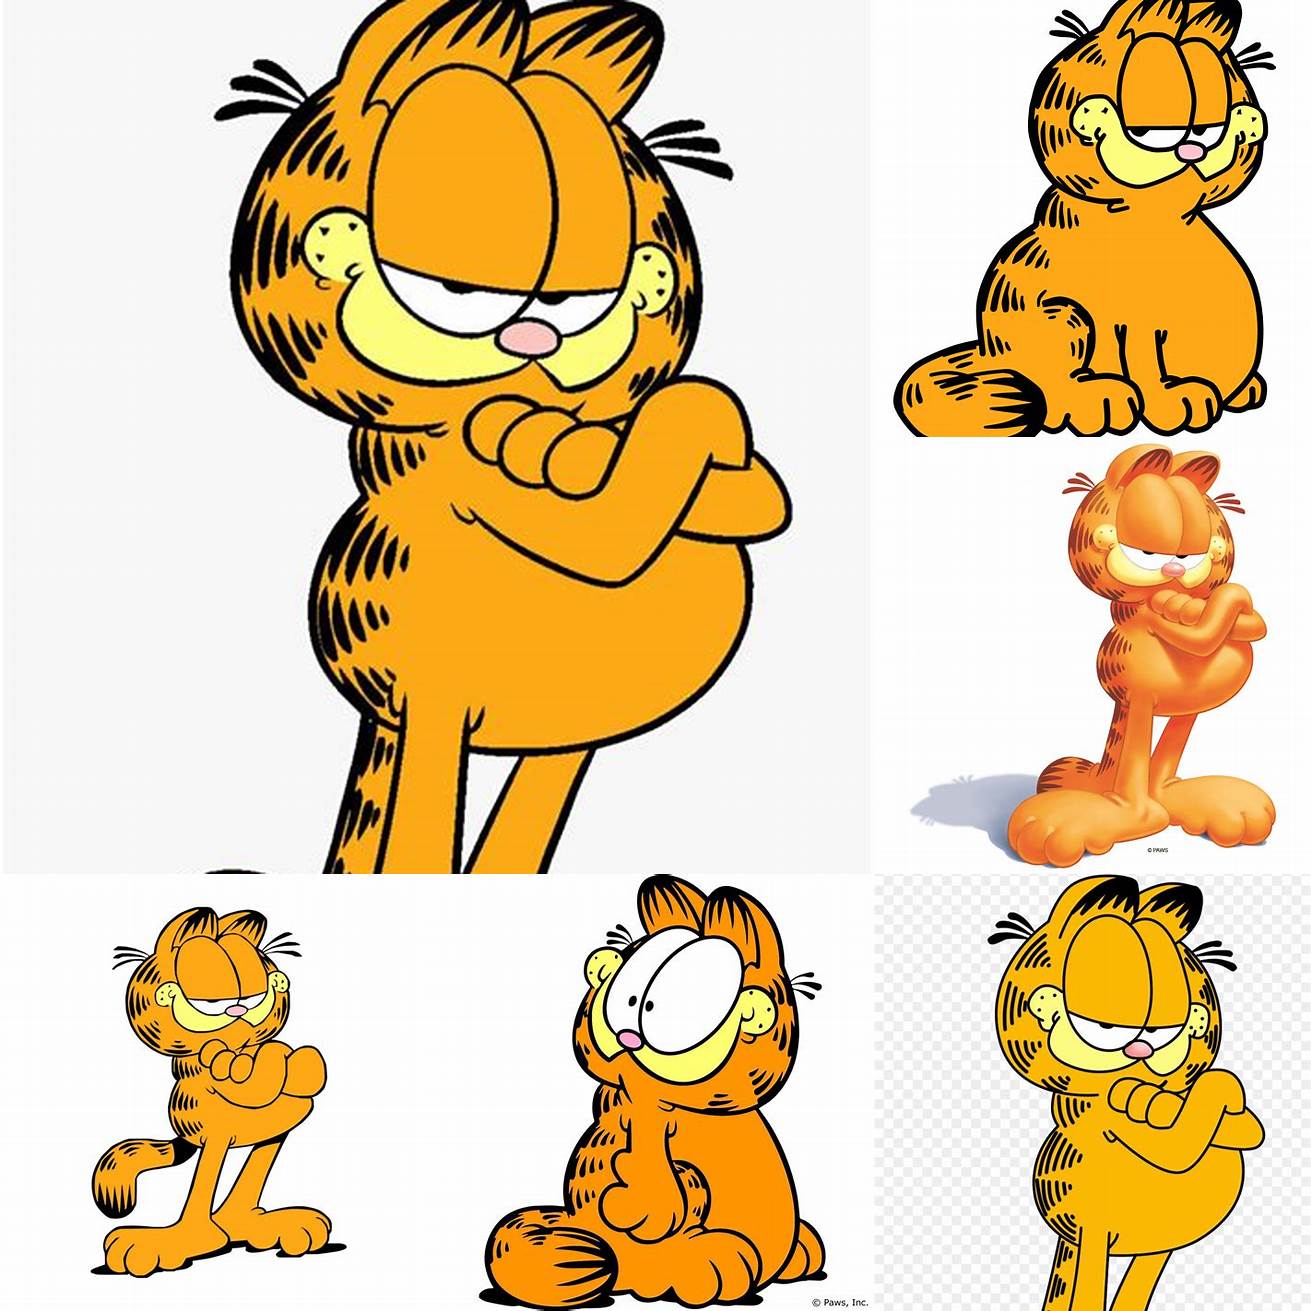 Garfield from Garfield